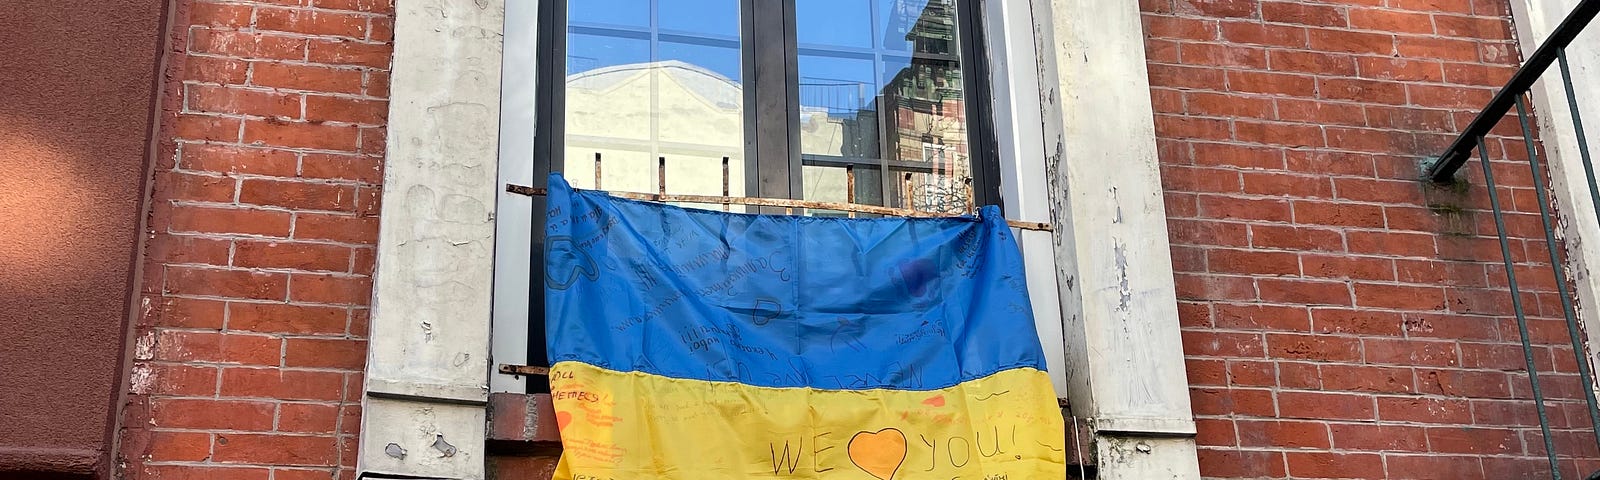 Photo of the Ukrainian Flag in a window in the Little Ukraine neighborhood of the East Village of New York.